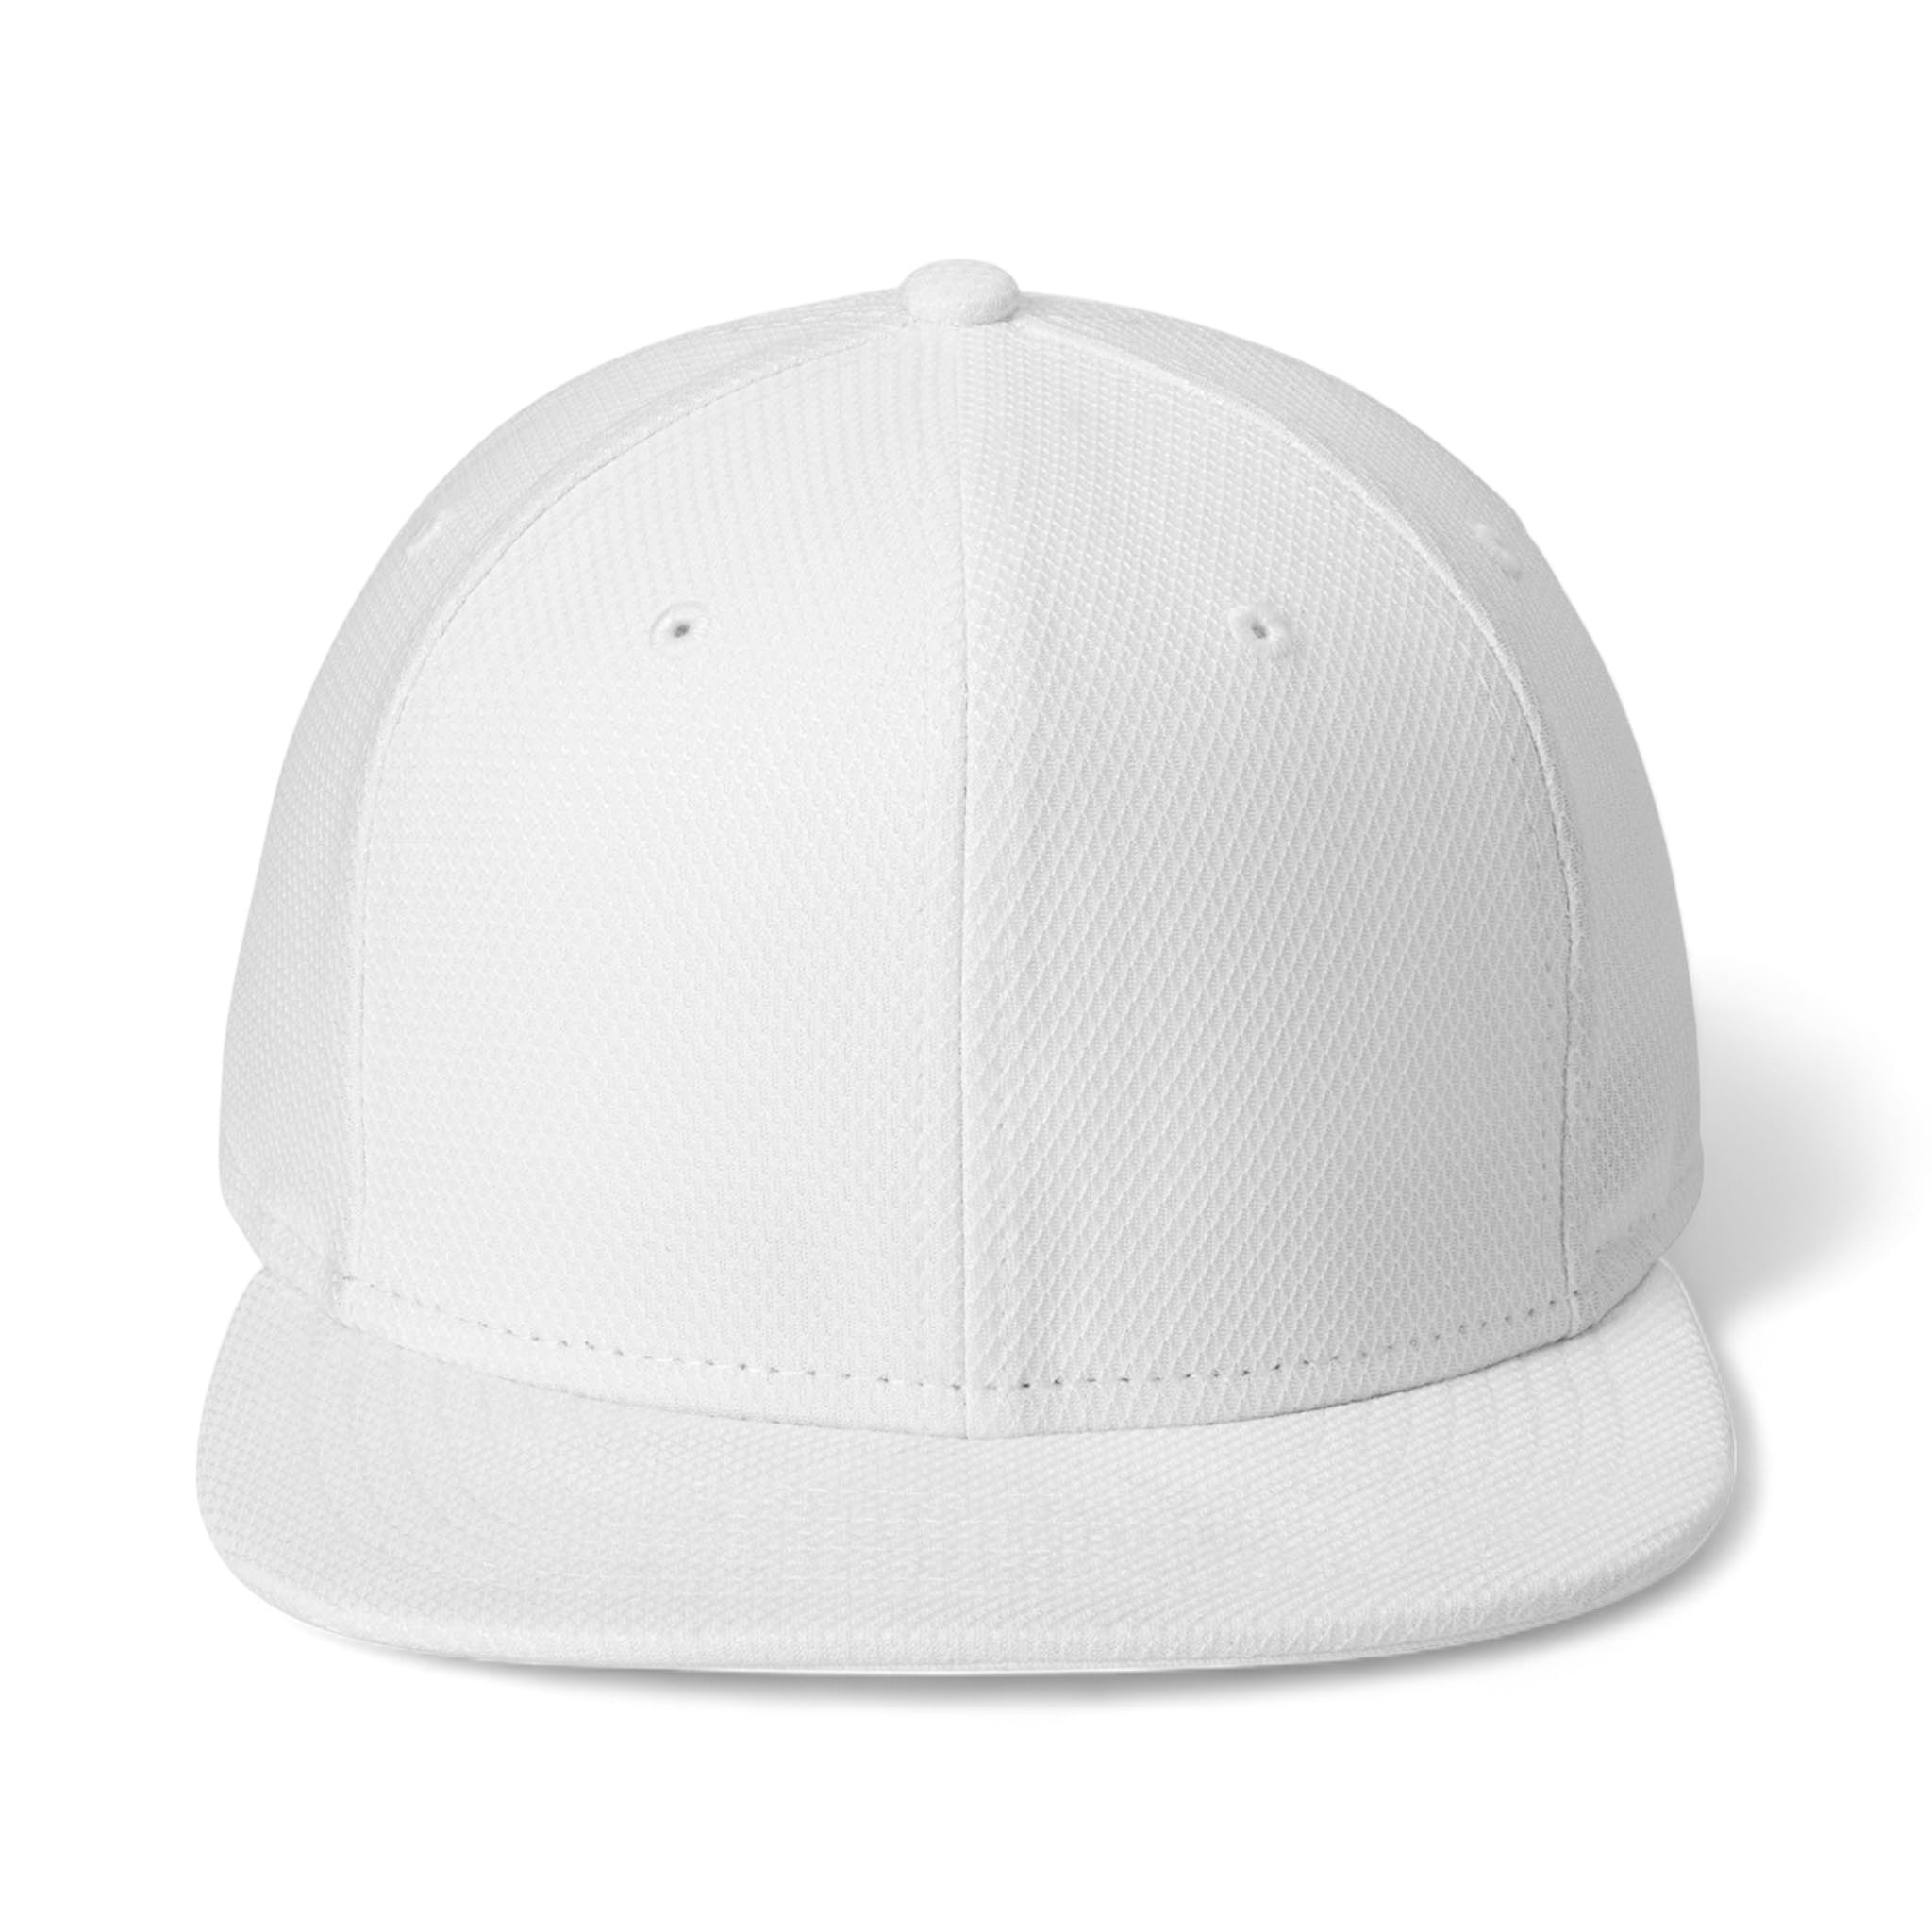 Front view of New Era NE404 custom hat in white